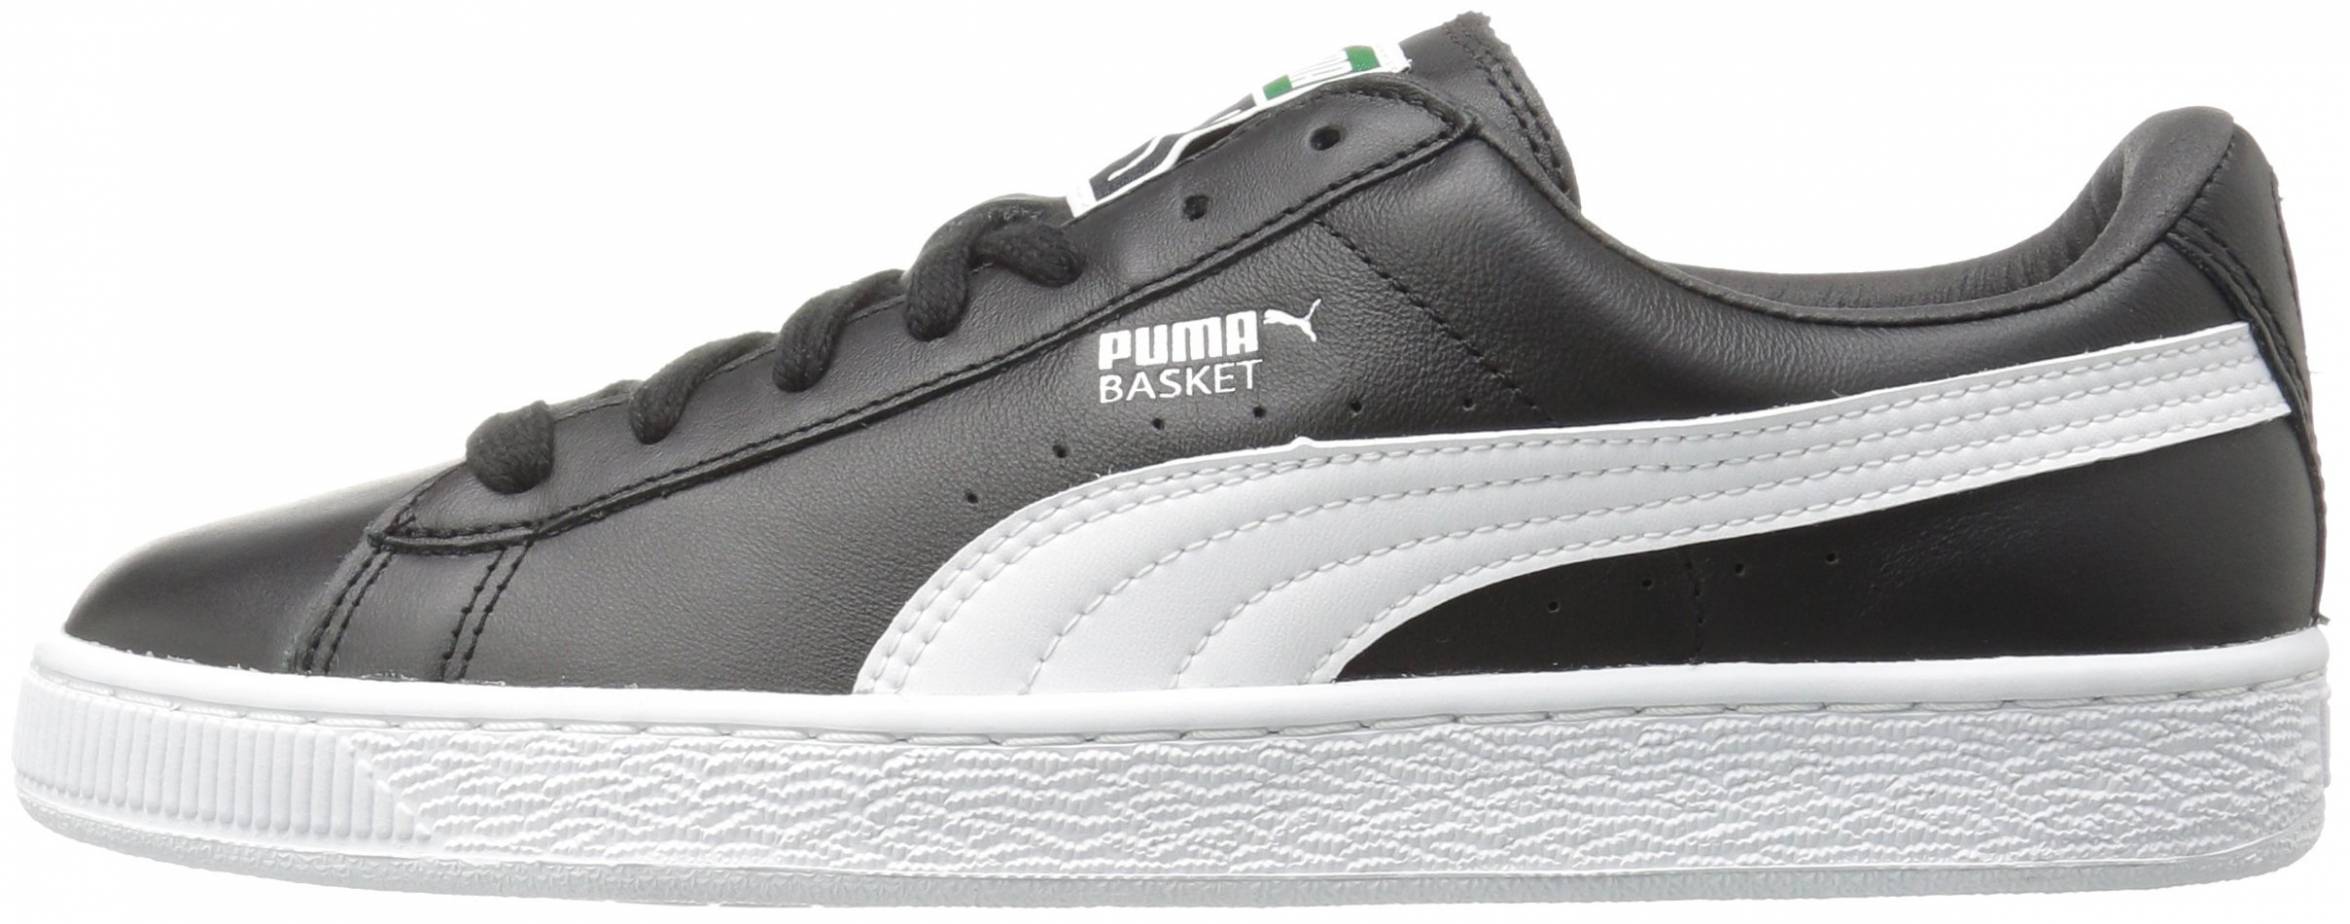 puma basket shoes price